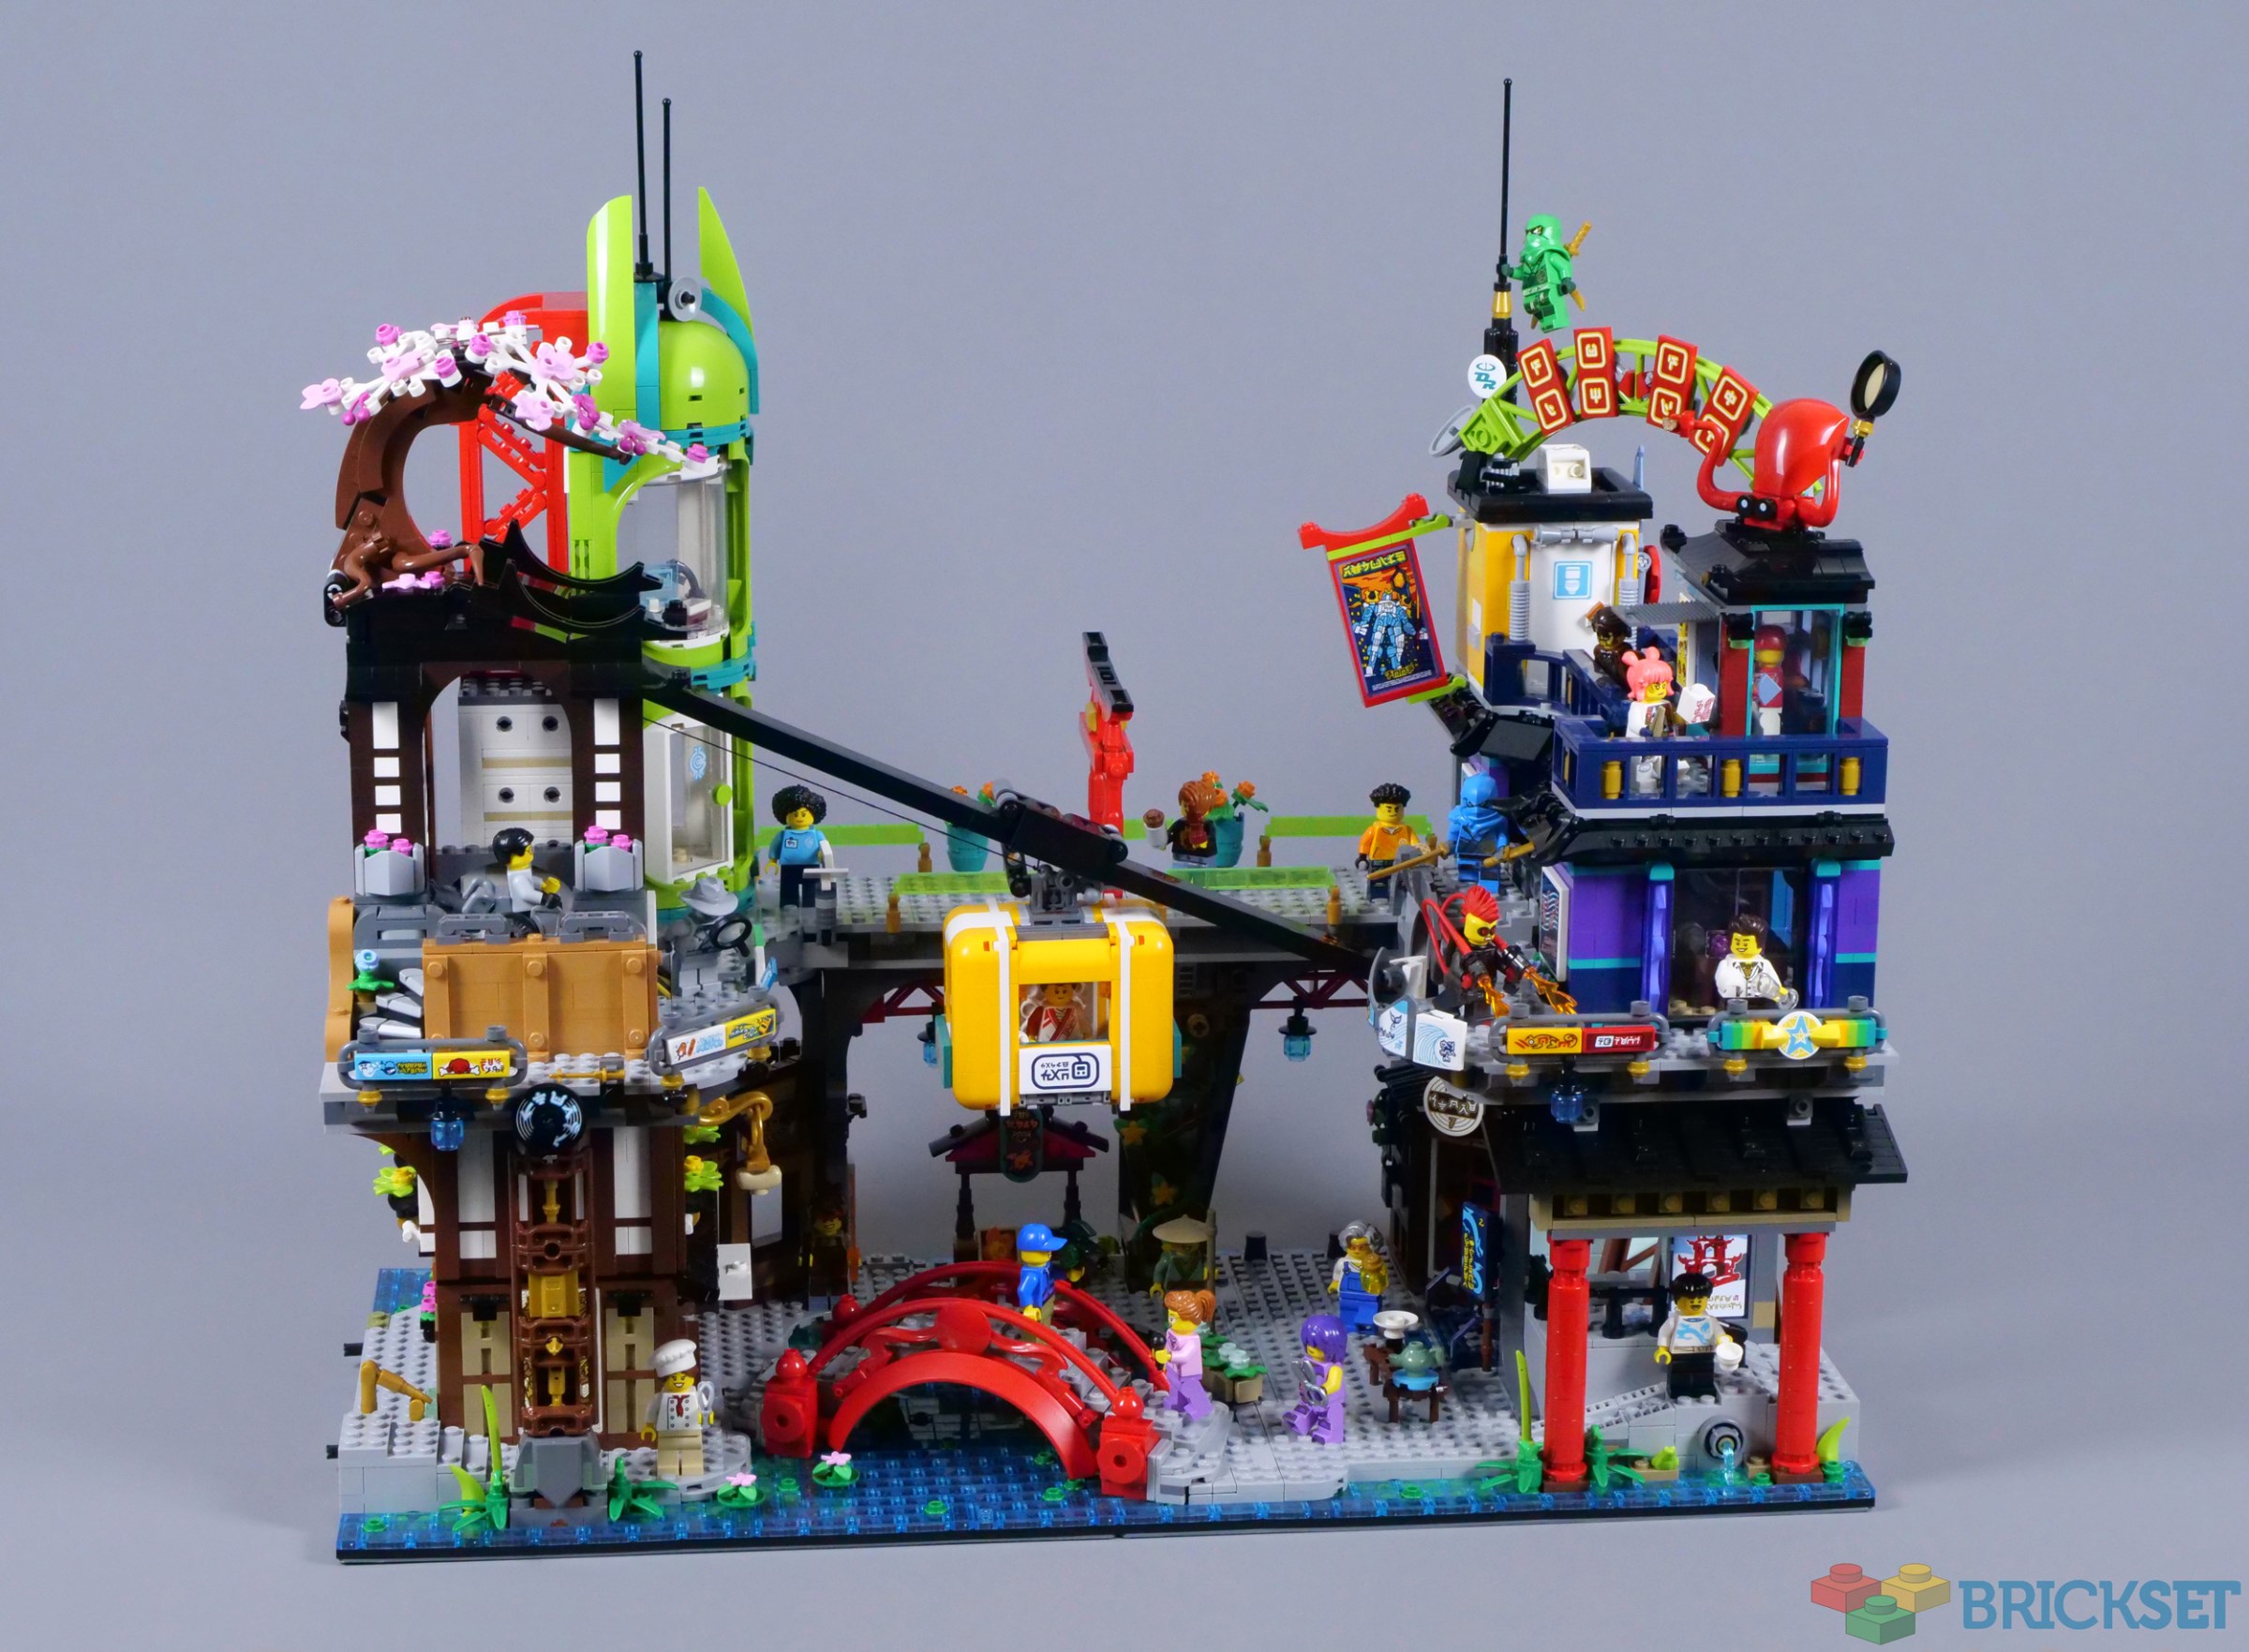 Lego ninjago - legacy - atlas de ninjago : Collectif - 2378890648